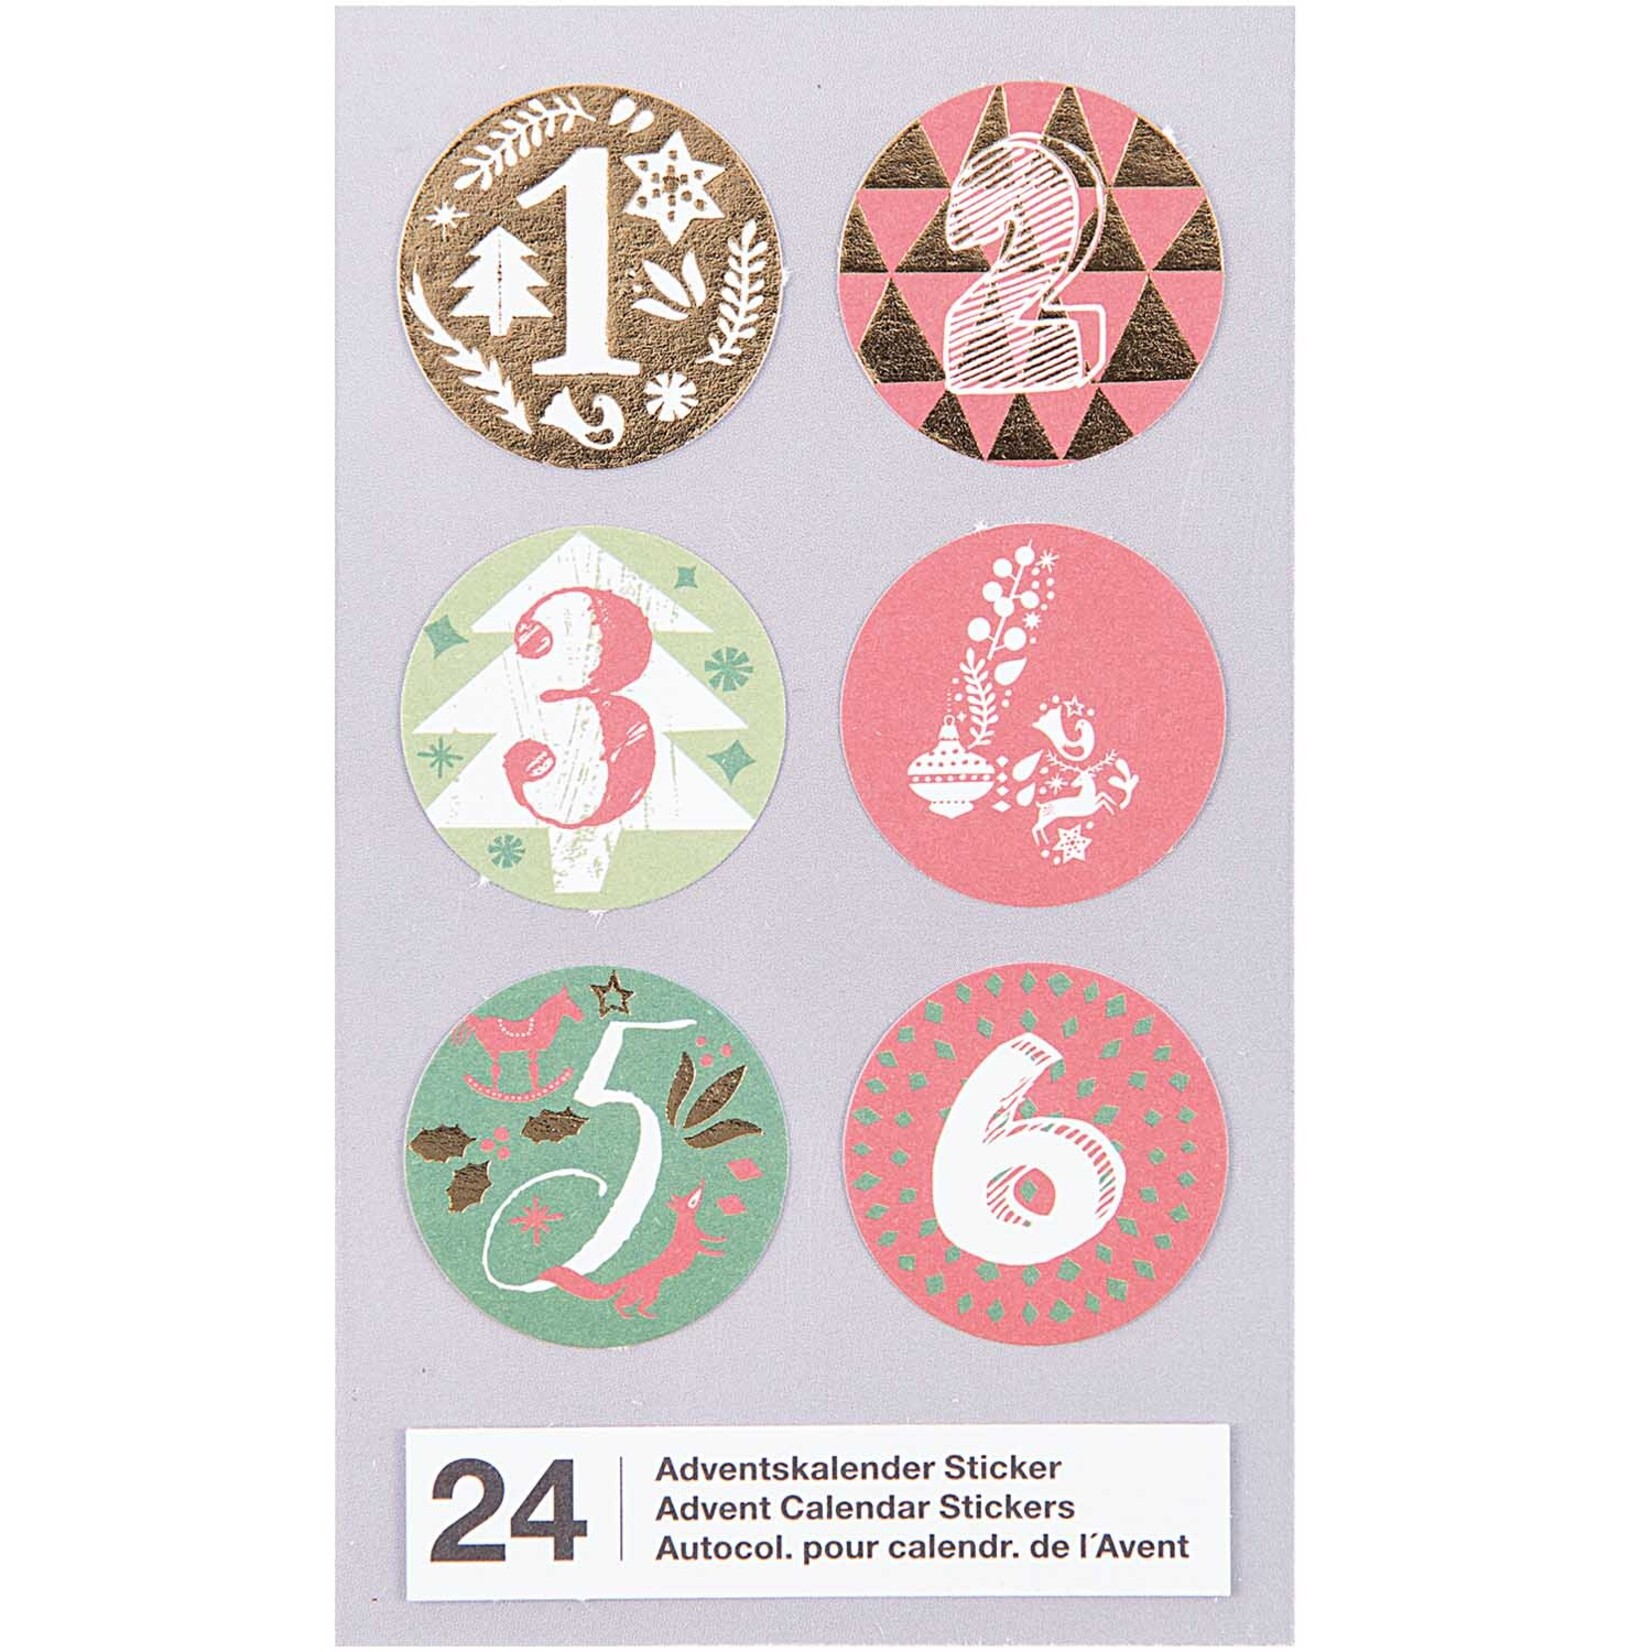 Adventkalender stickers - Rood/Groen